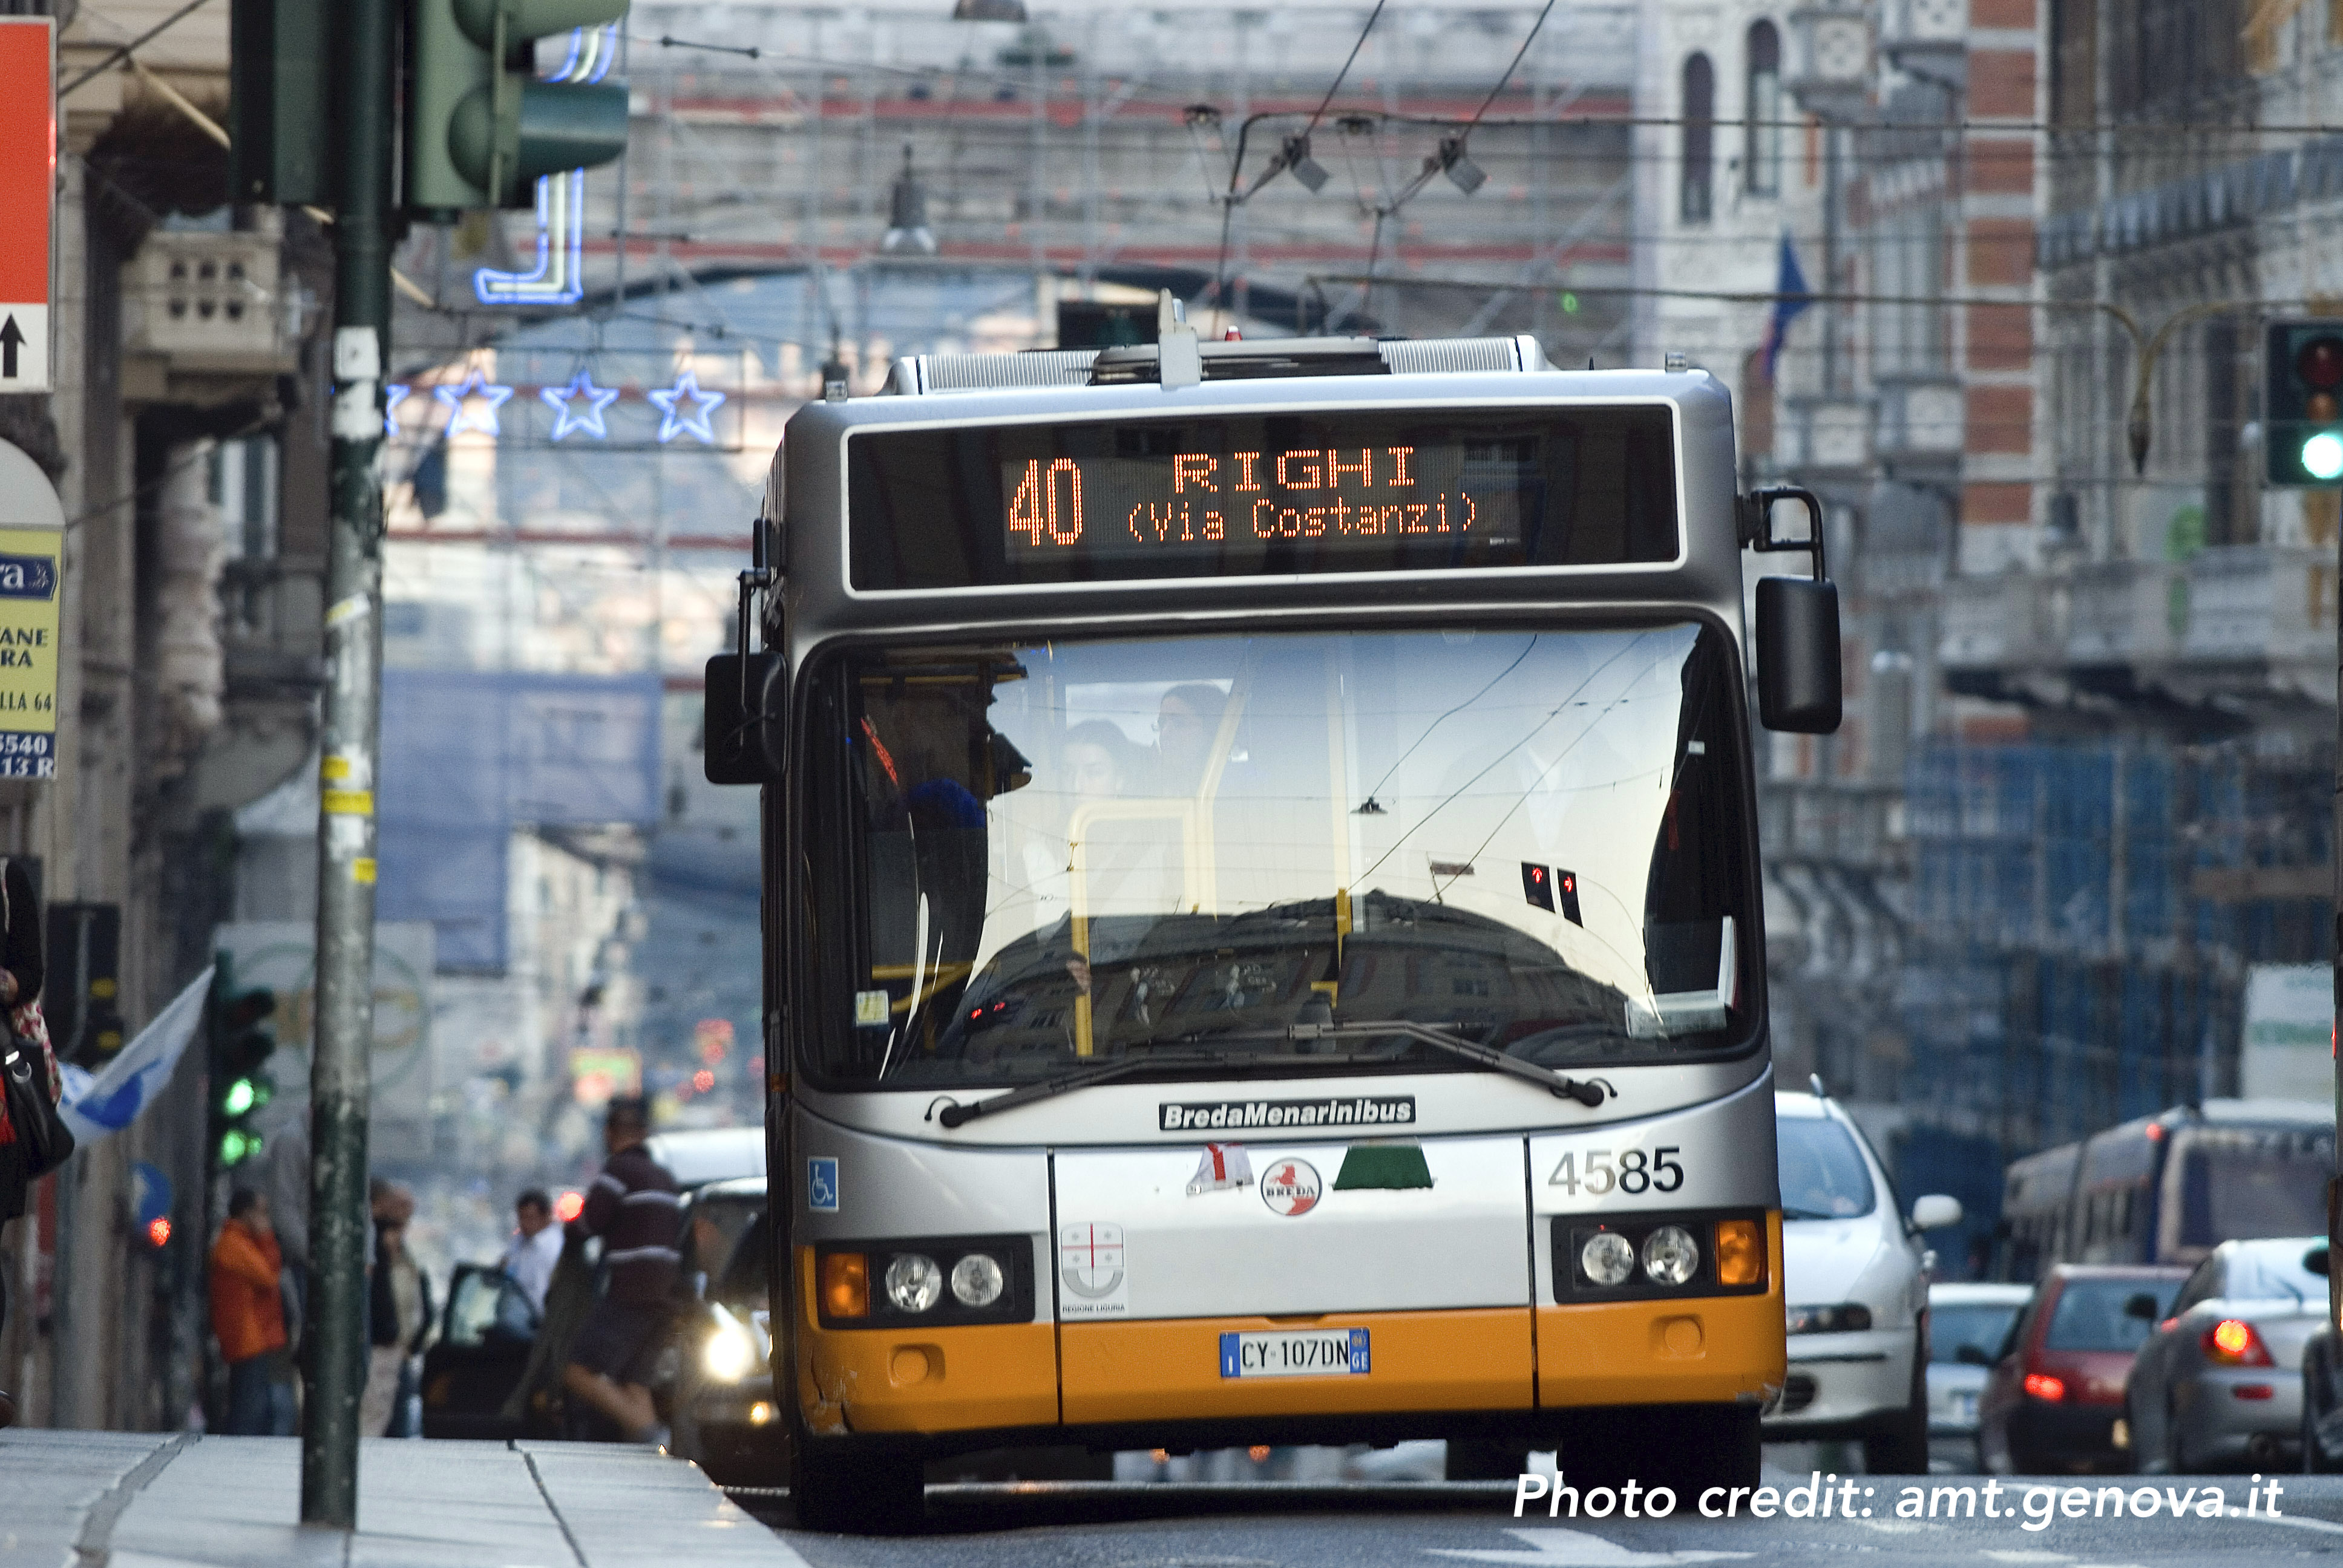 amt_genoa_italy_public_transport_bus